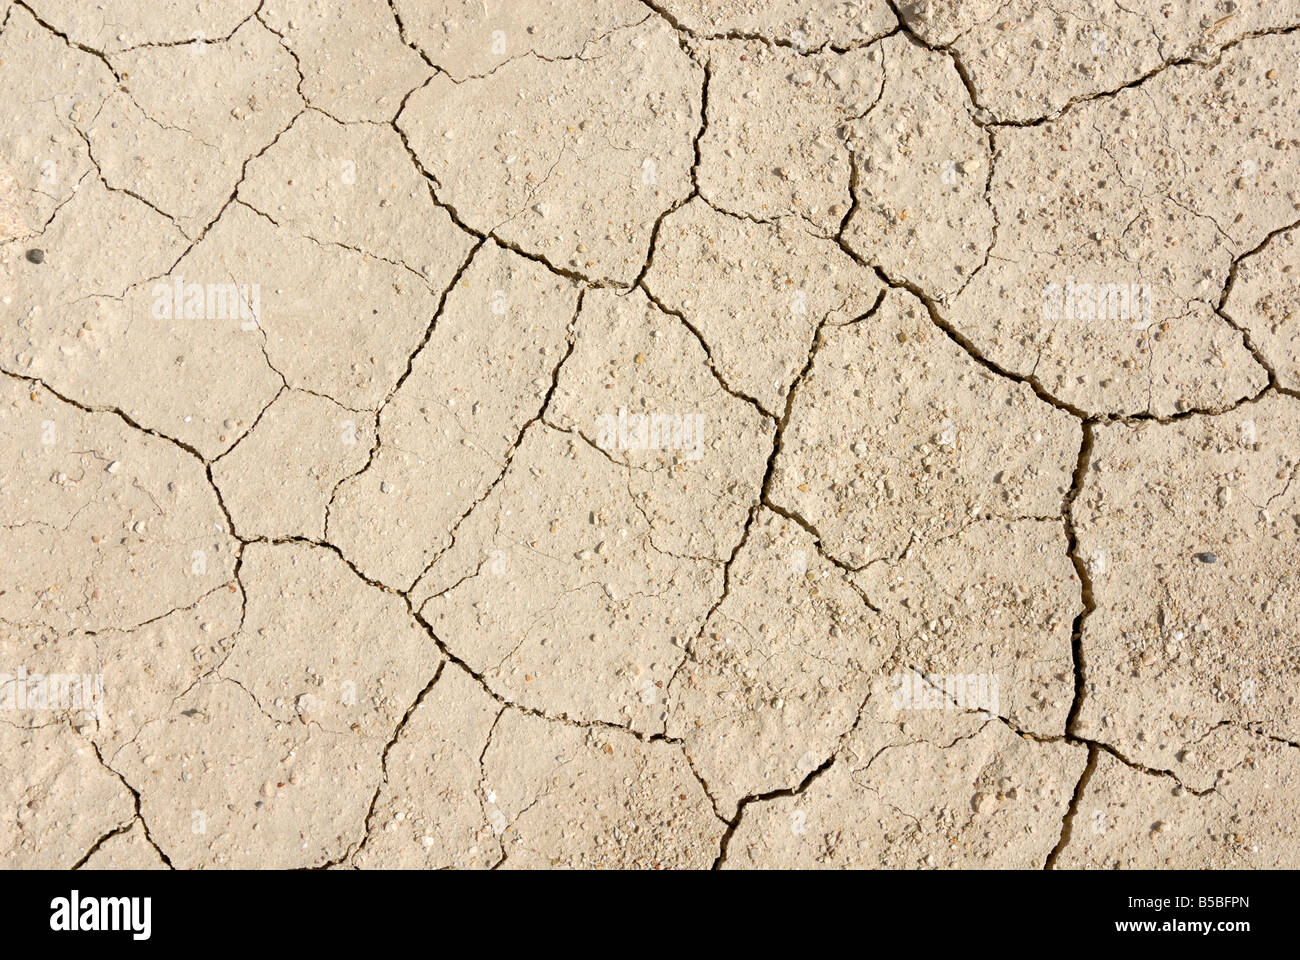 Dry cracked soil Stock Photo